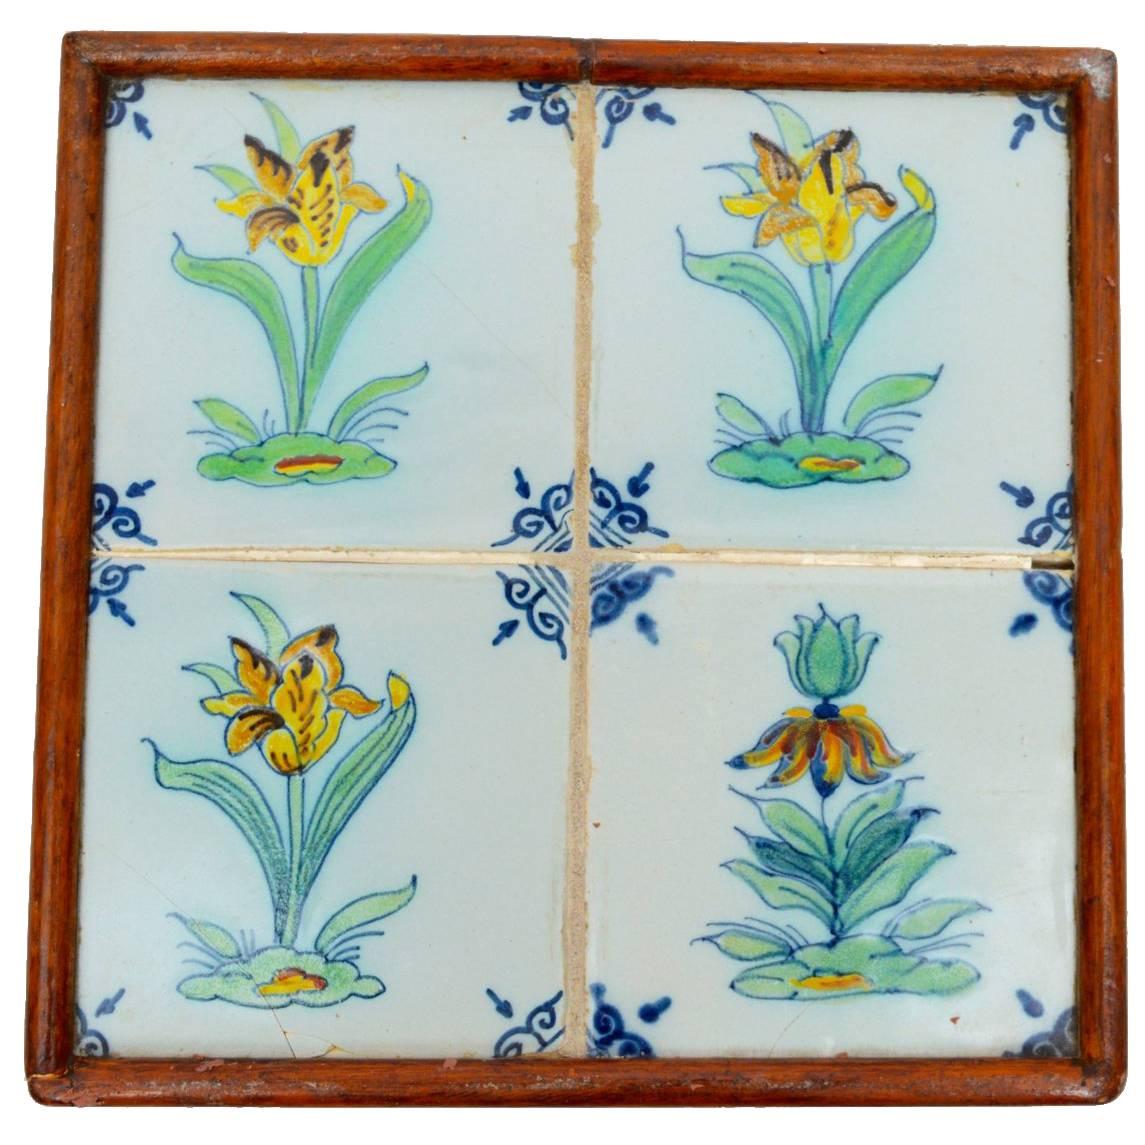 18th Century Dutch Delft Tile Plaque or Trivet Depicting Tulips